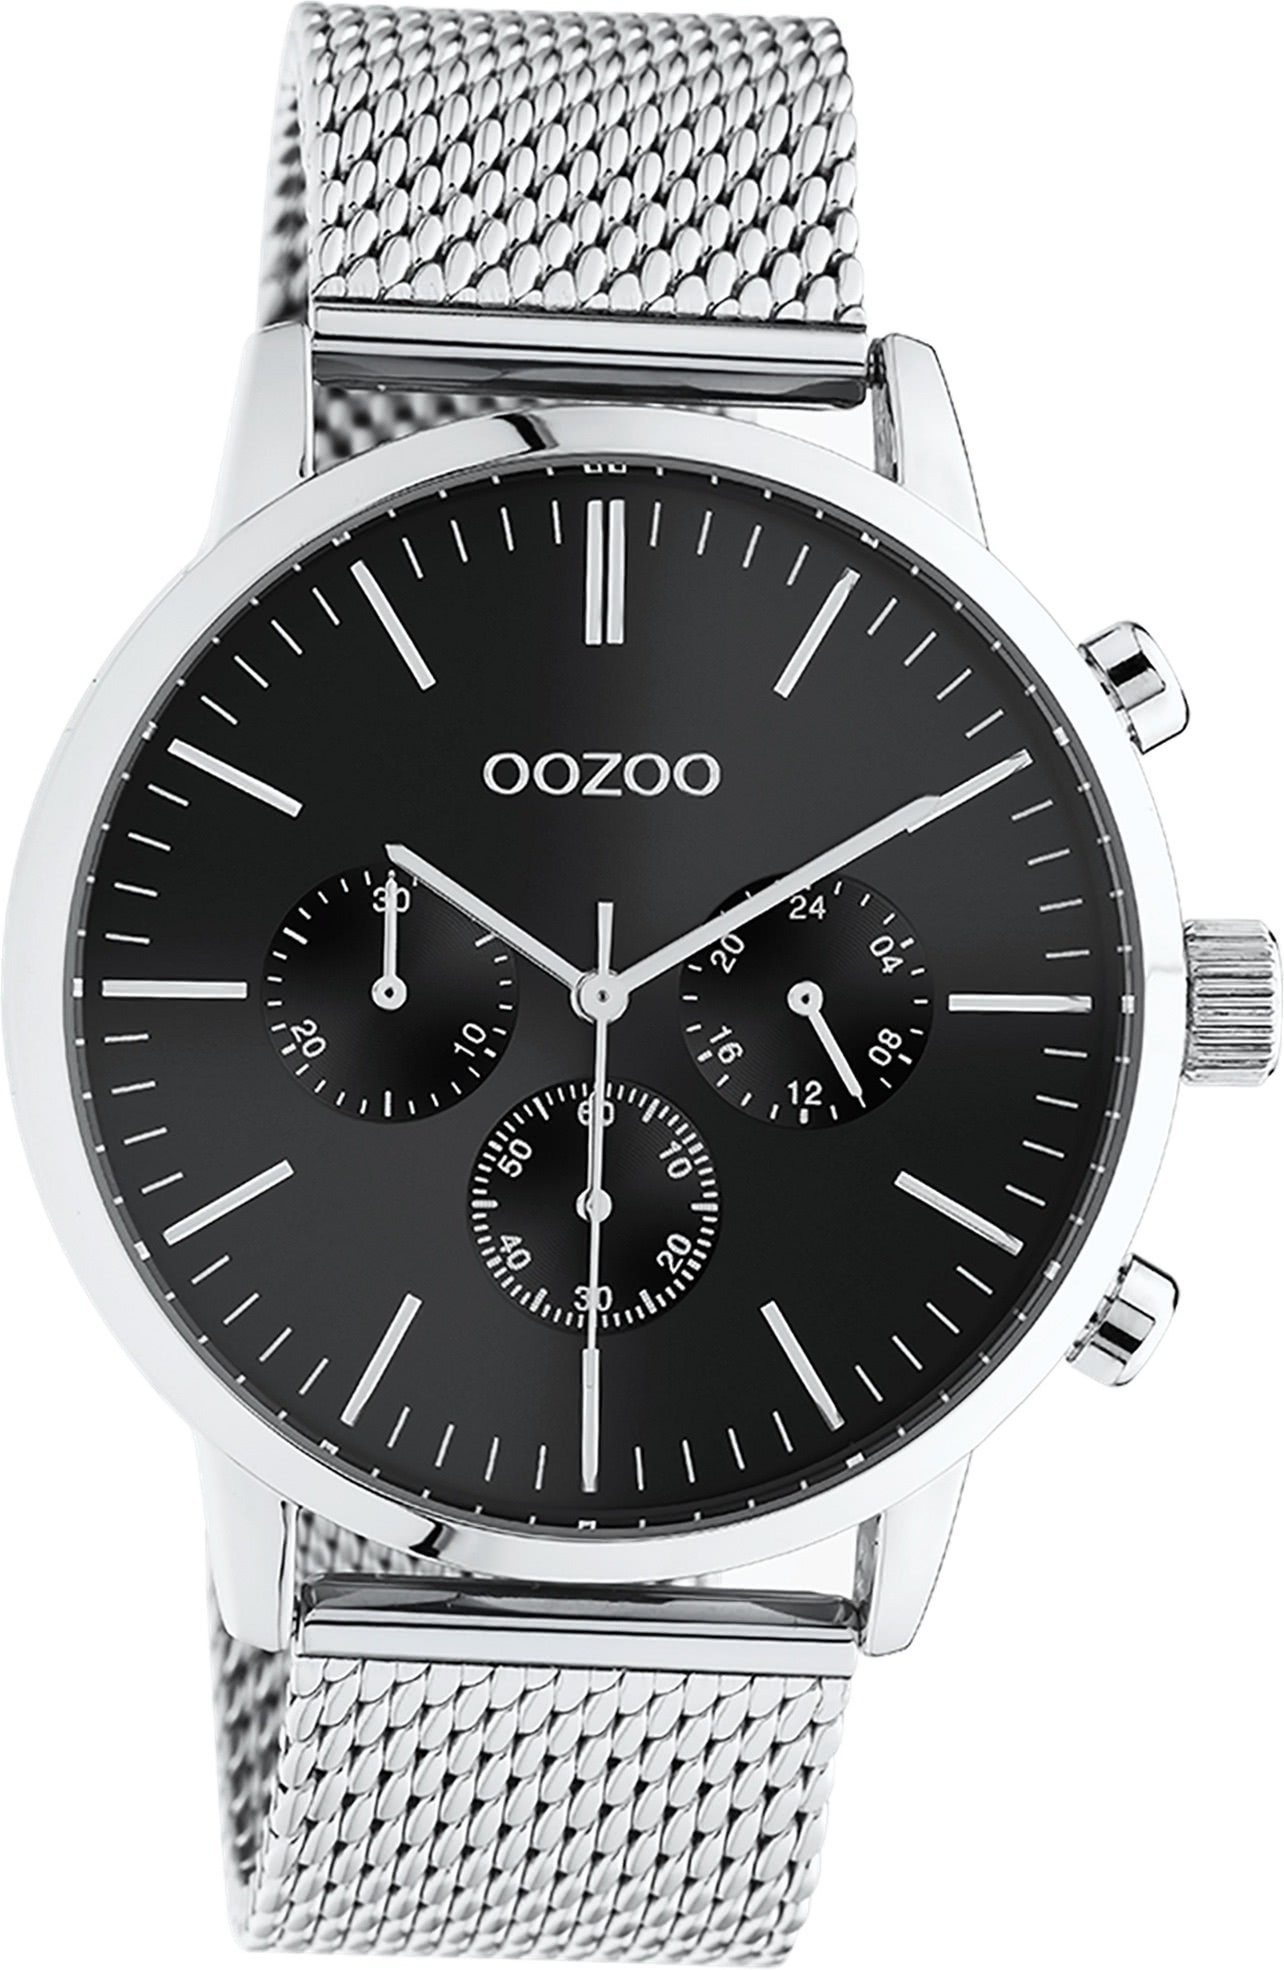 OOZOO Quarzuhr silber, Edelstahl Herrenuhr Uhr Analog, 10913 (45mm) rundes Unisex Edelstahlarmband groß Gehäuse, Oozoo Damen